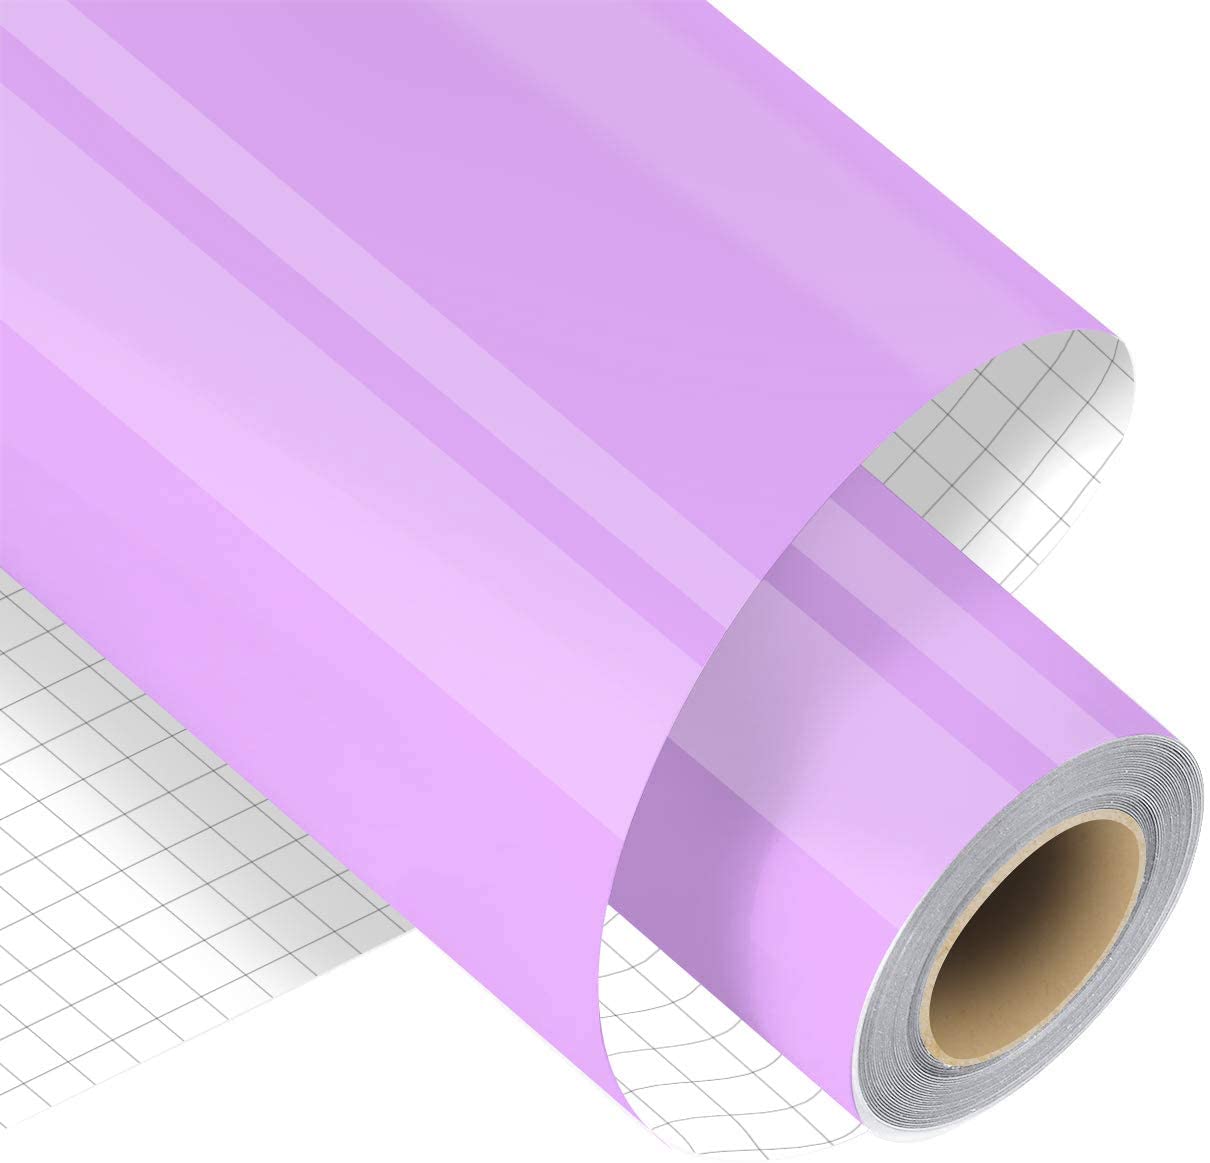 Wholesale Violet Adhesive Vinyl Rolls